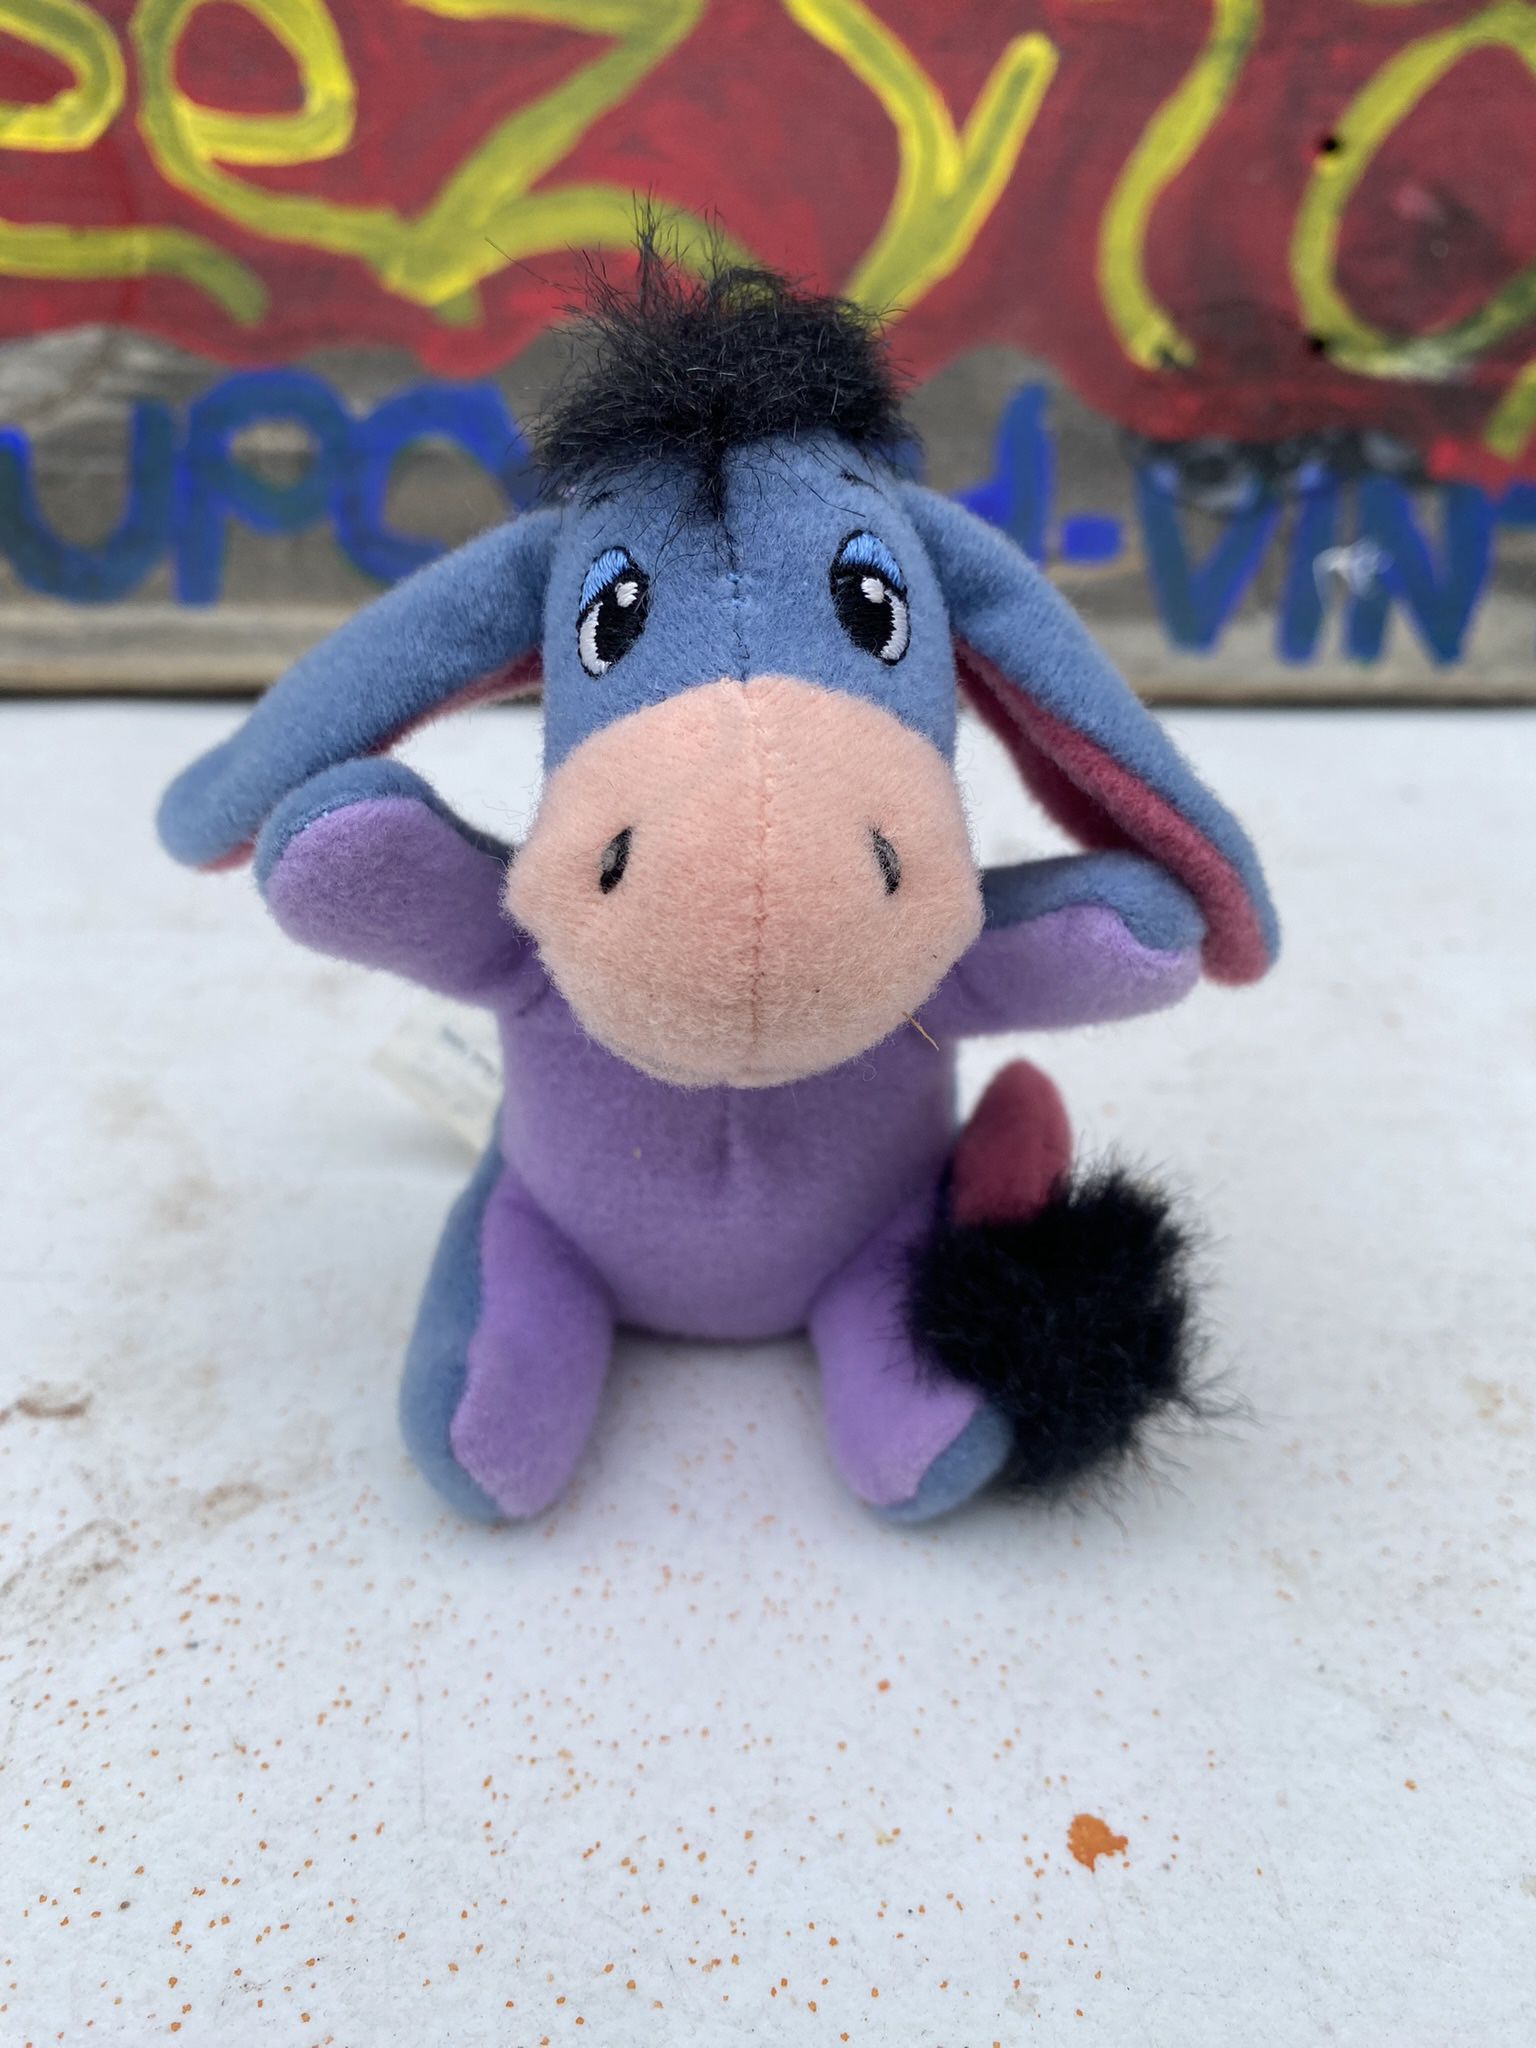 Disney’s Eeyore from Winnie the Pooh Bean Bag Plush Stuffed Animal Toy